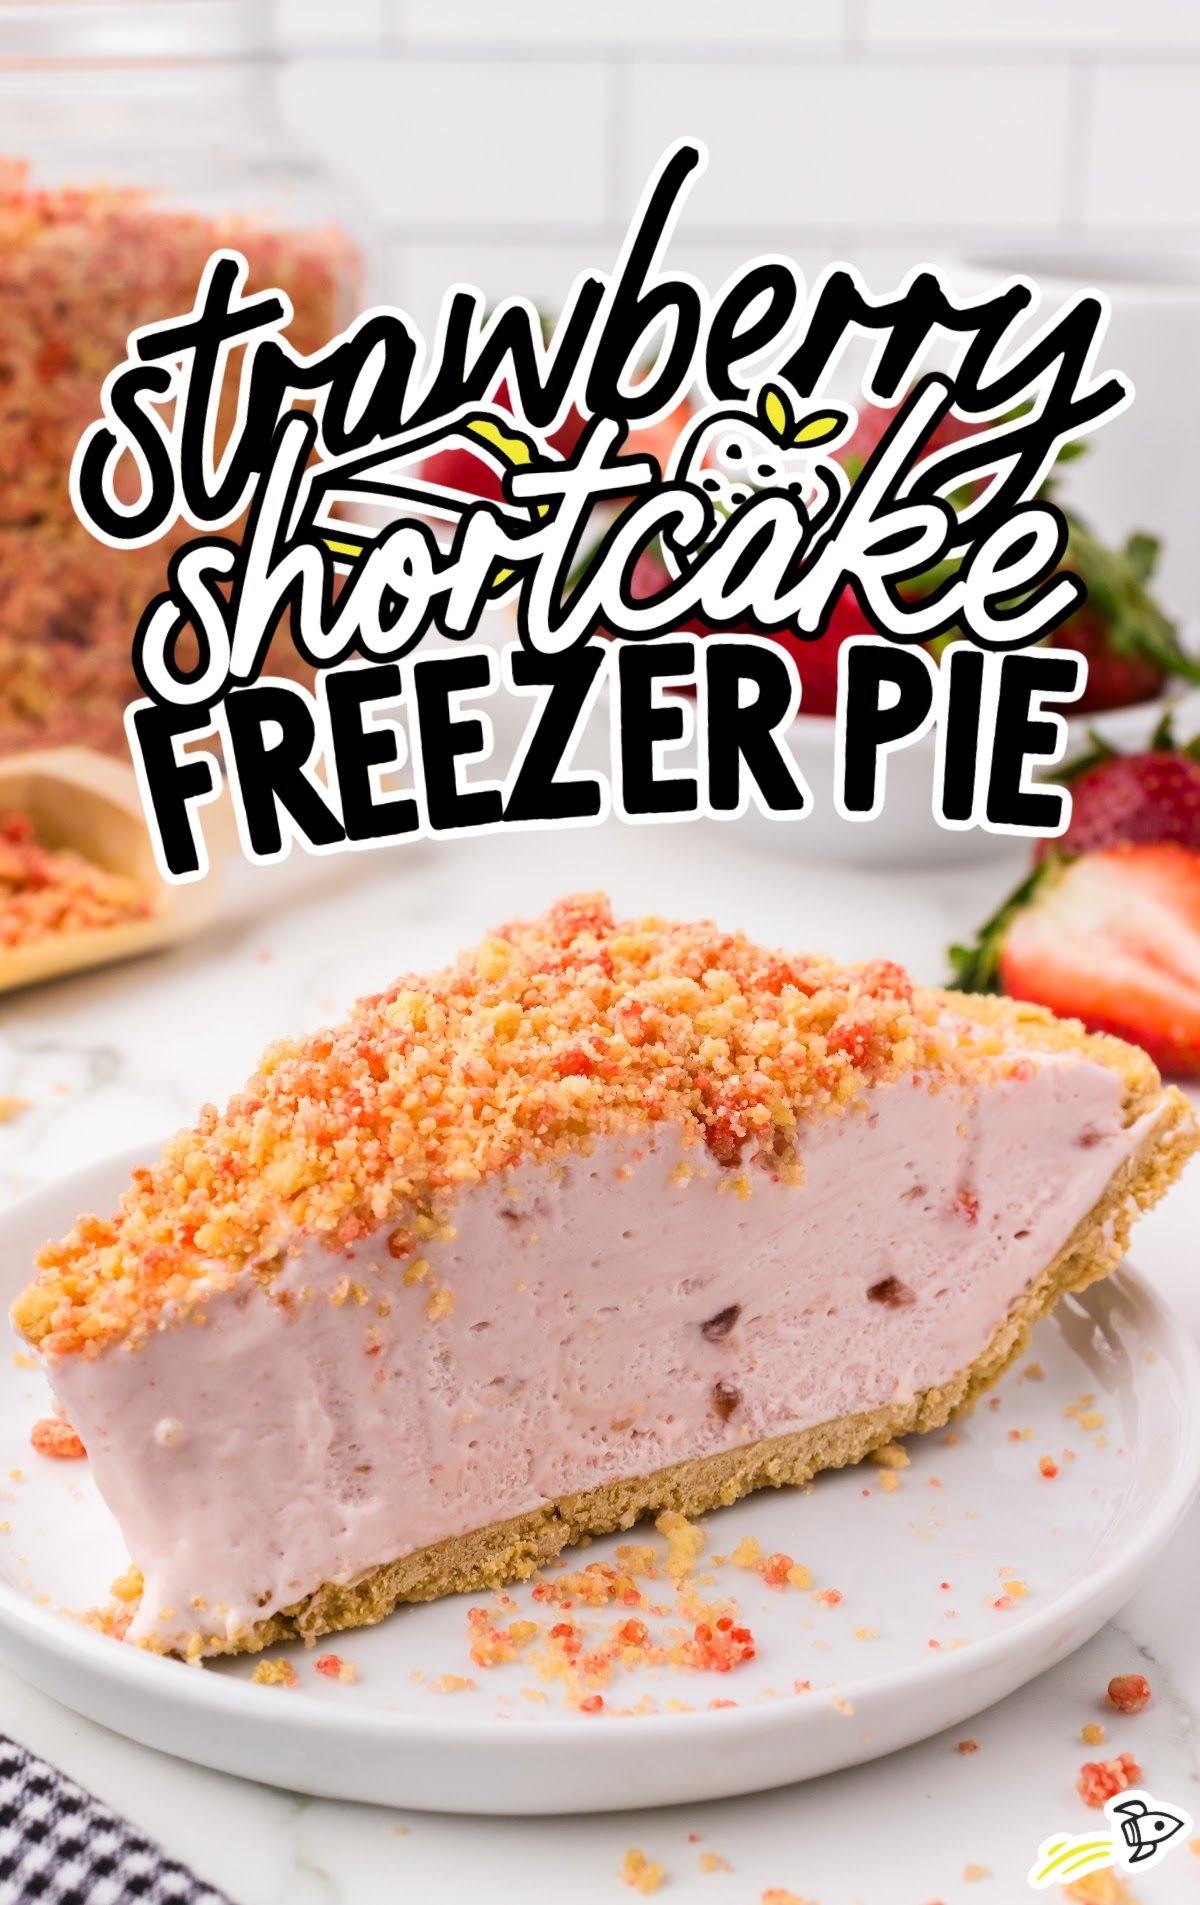 Slice of strawberry freezer pie on a plate ready to serve.